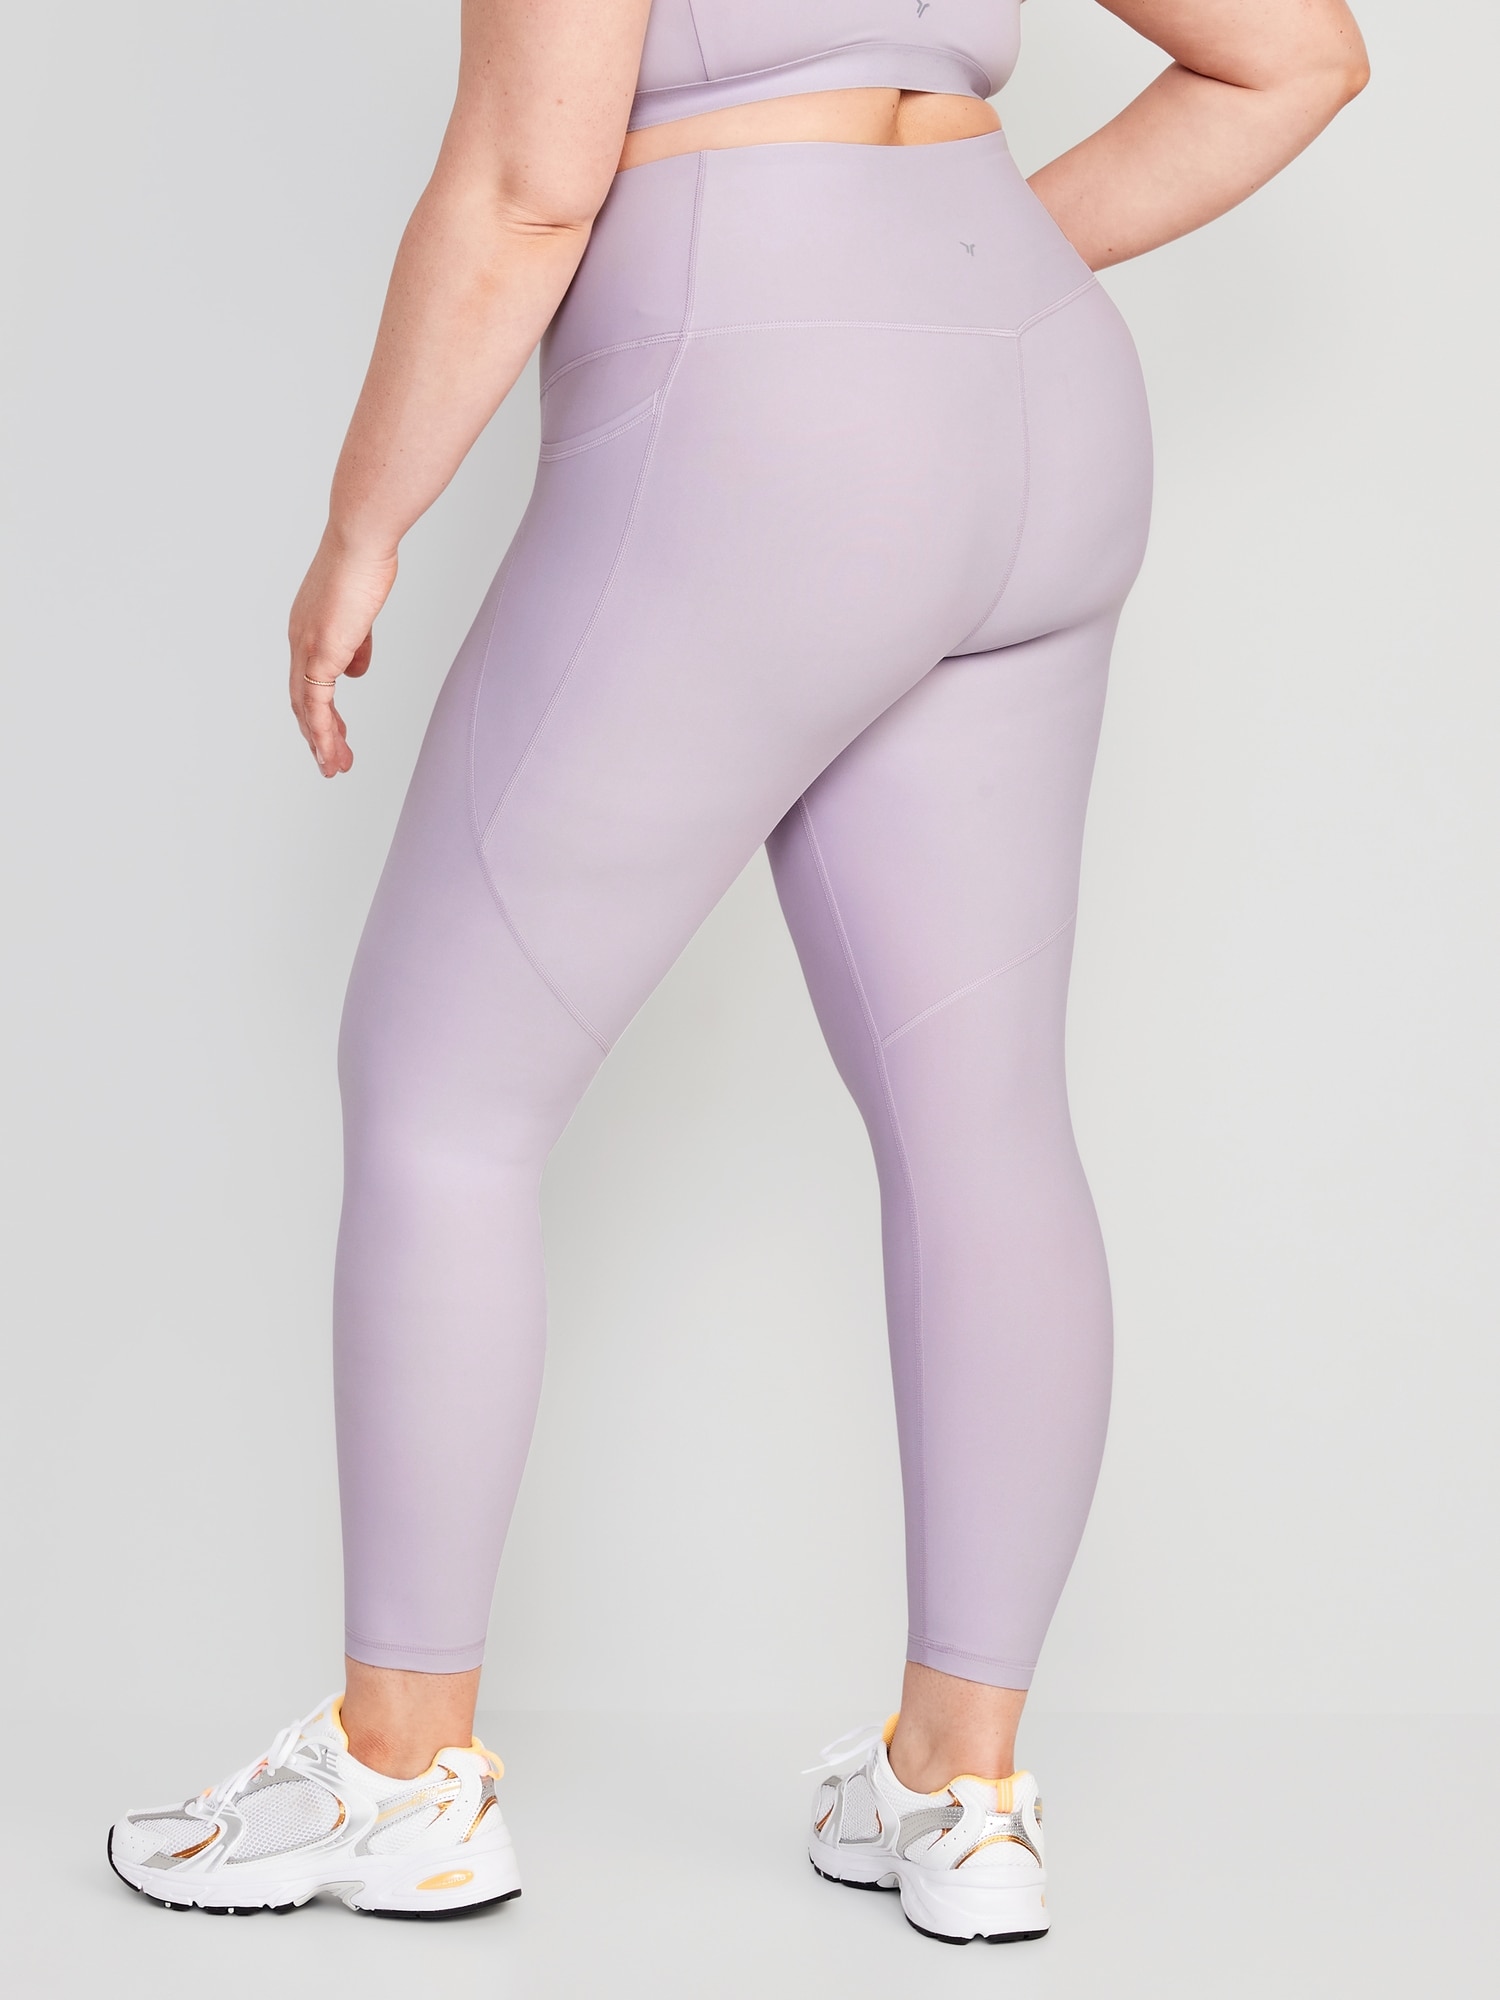 Nux Women's Shapeshifter 7/8 Length Yogs Leggings, Purple, Medium